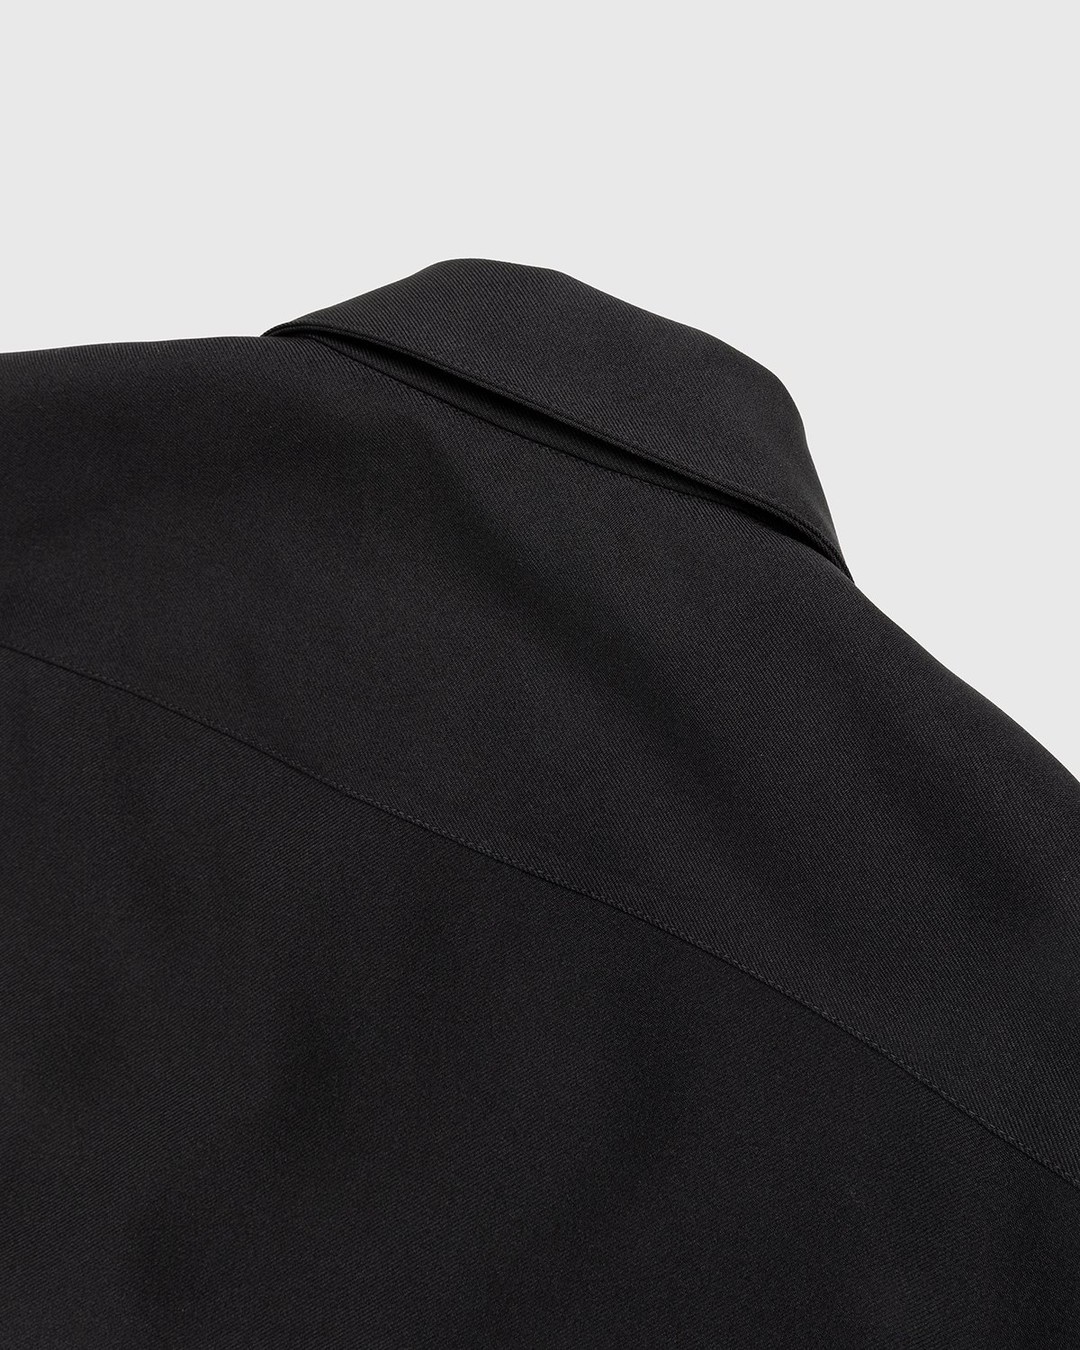 Jil Sander – Full Zip Shirt Black - Longsleeve Shirts - Black - Image 4